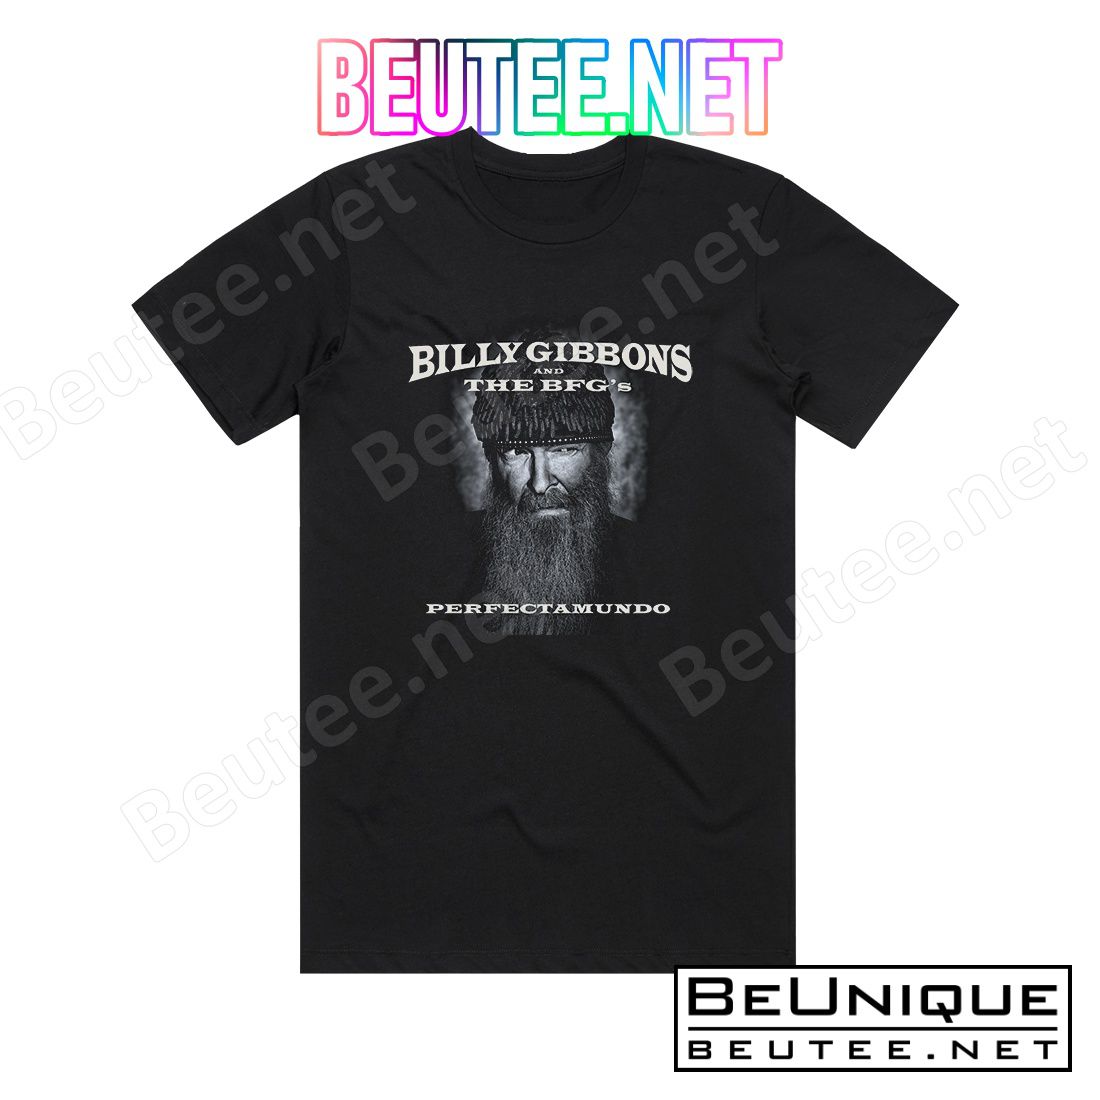 Billy Gibbons and The BFG's Perfectamundo Album Cover T-Shirt